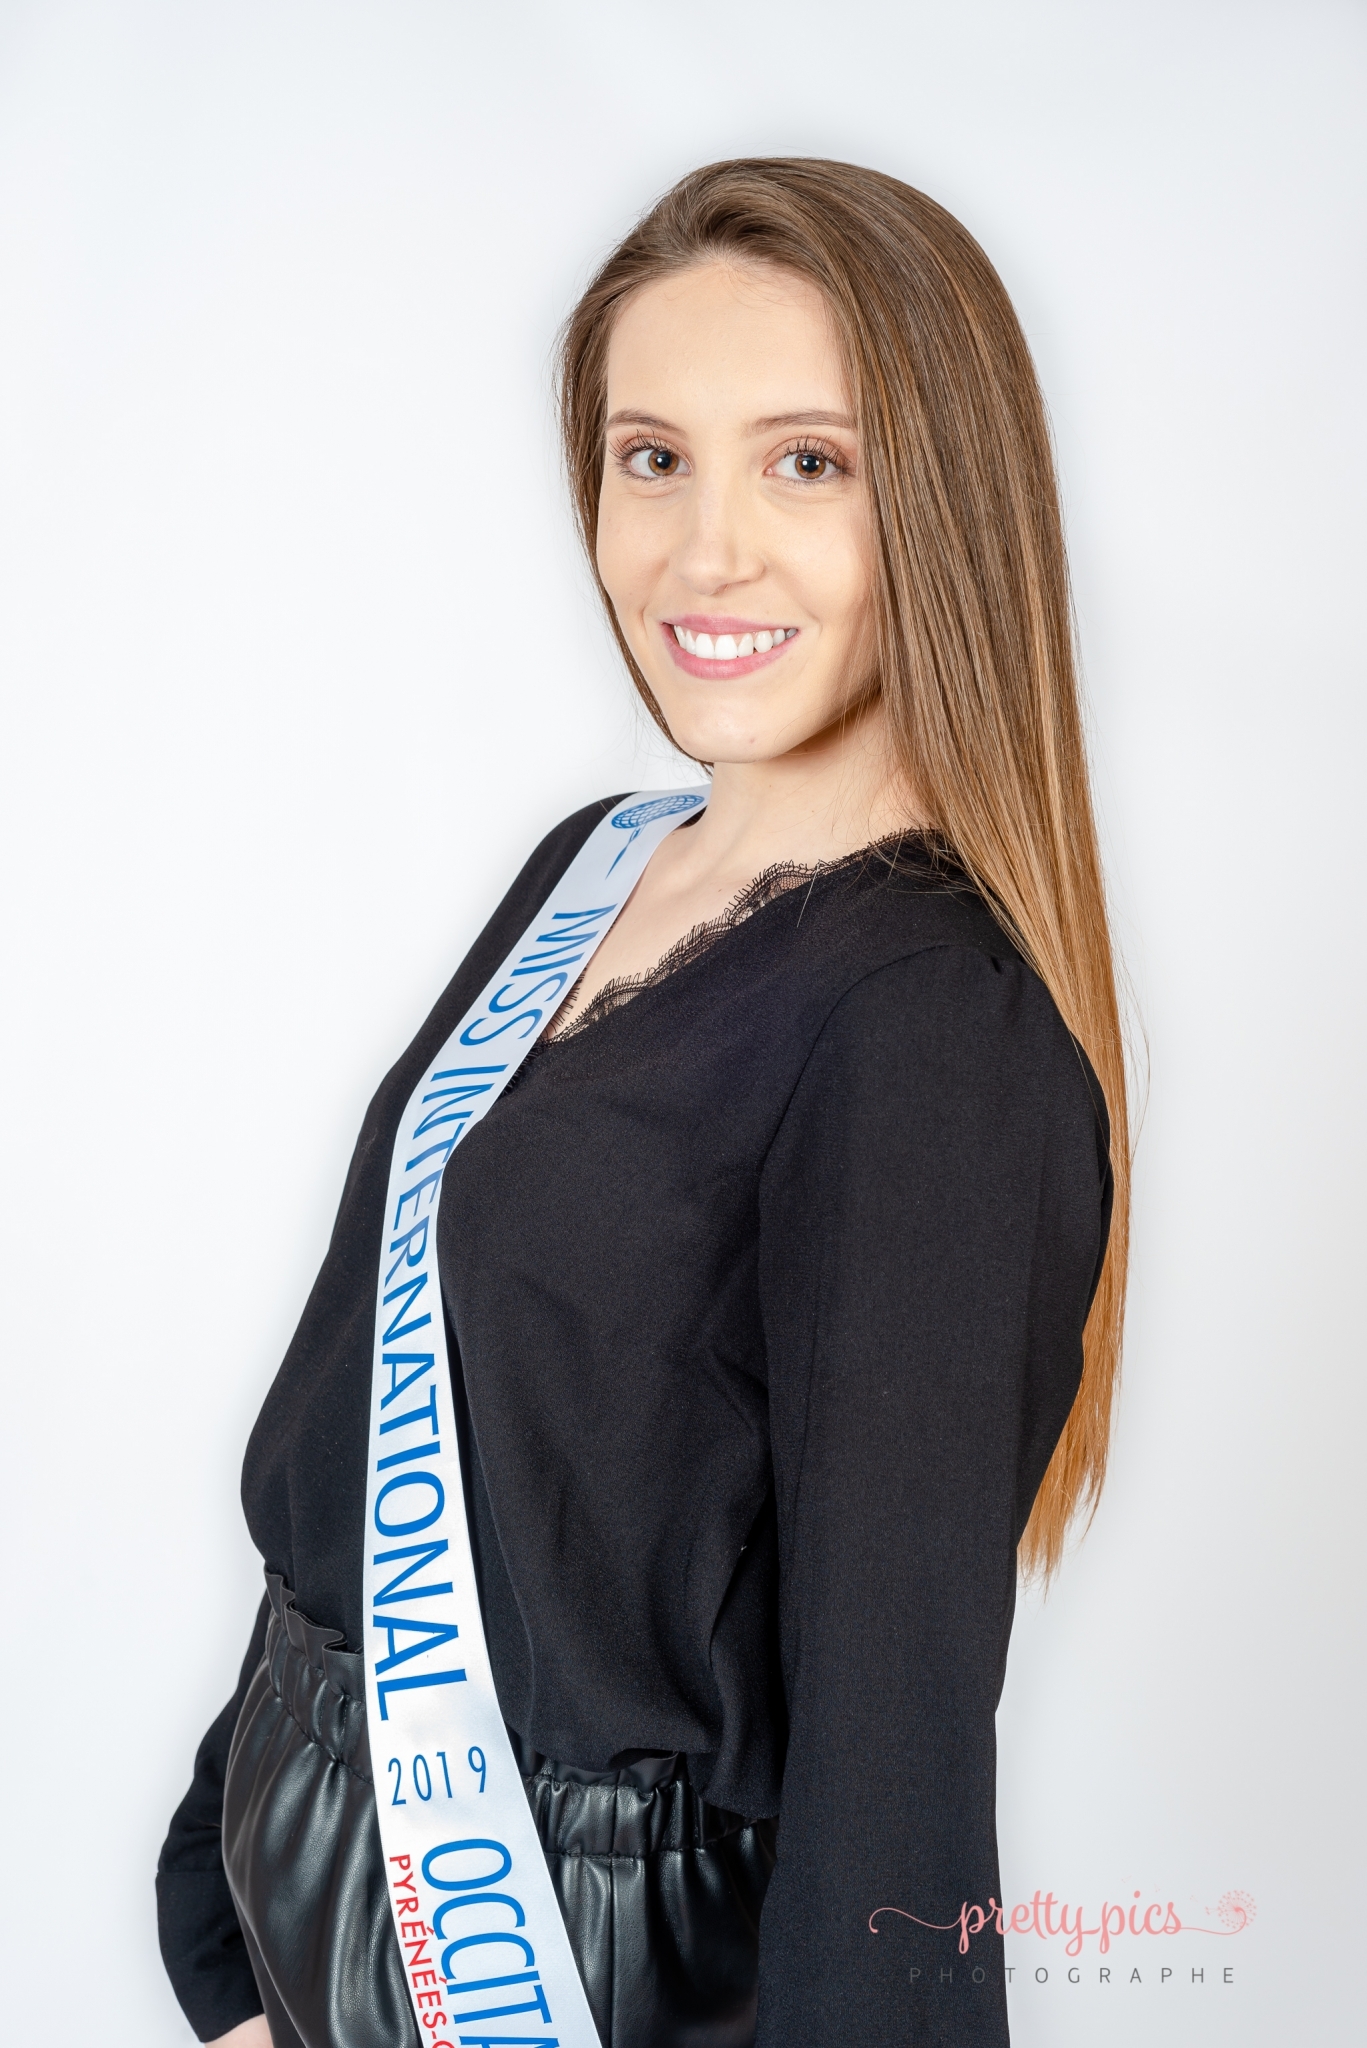 Tiphaine Stégura, Miss International Occitanie 2019